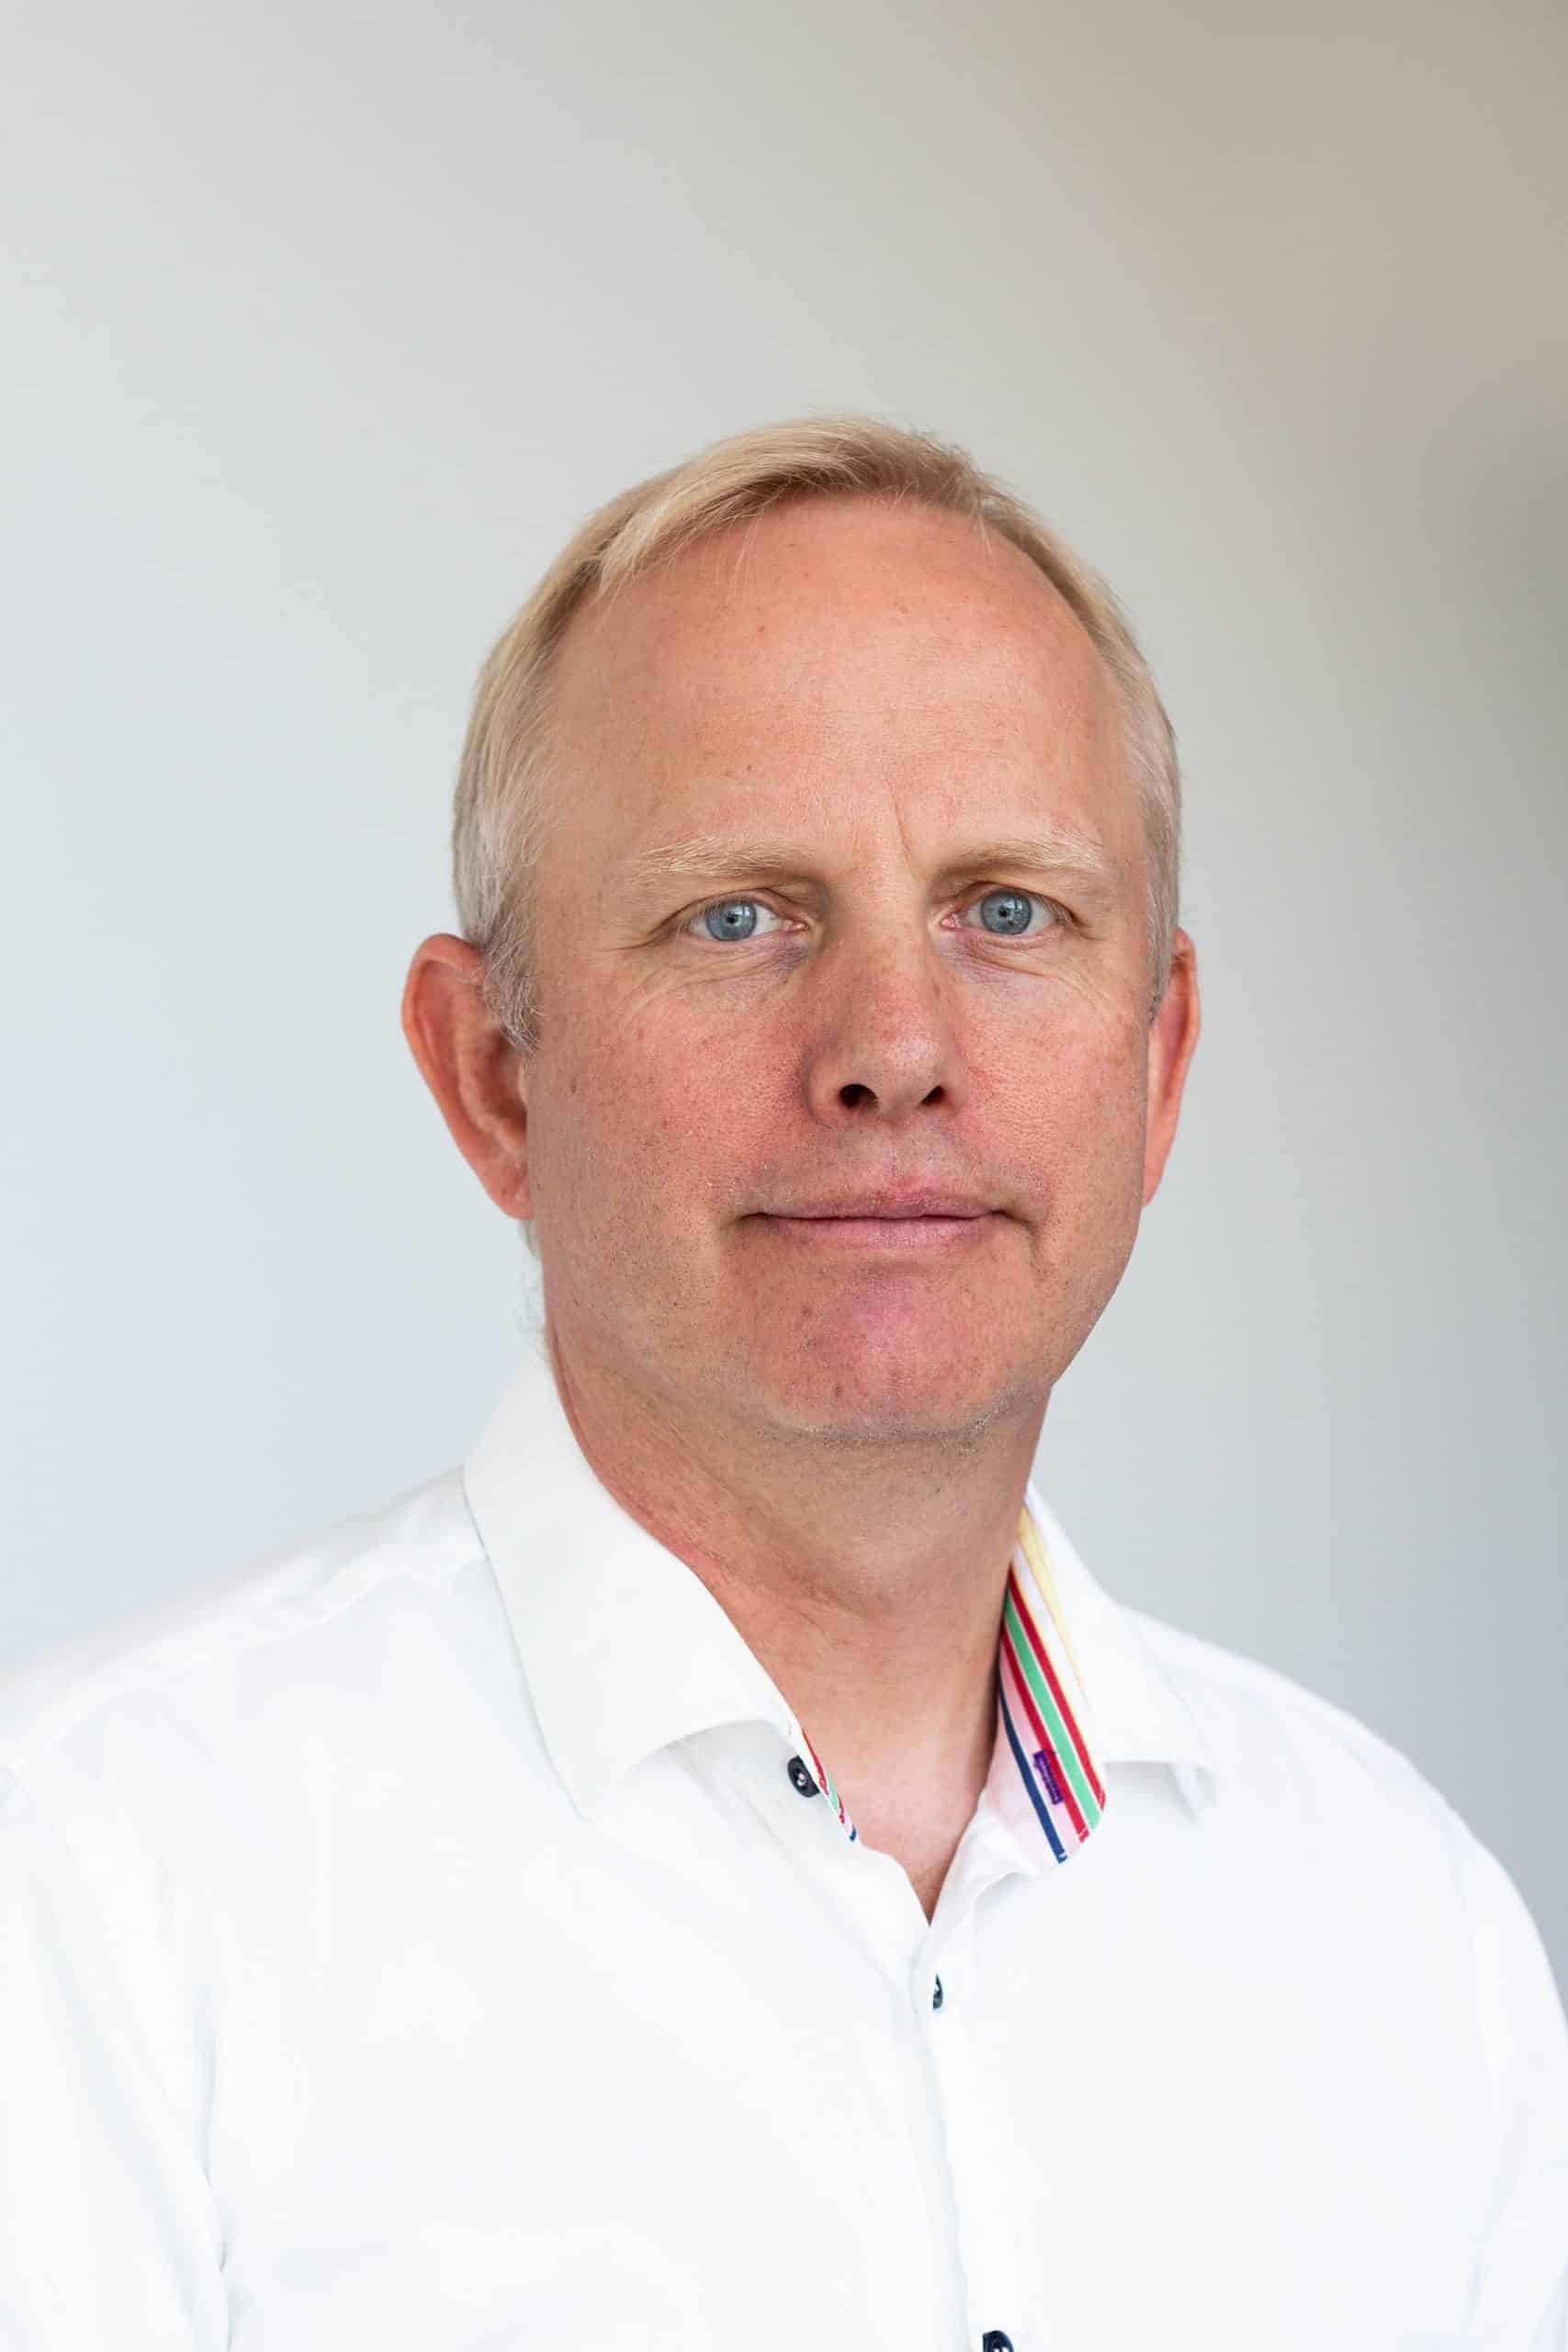 Carsten Rhod Gregersen - CEO of Nabto